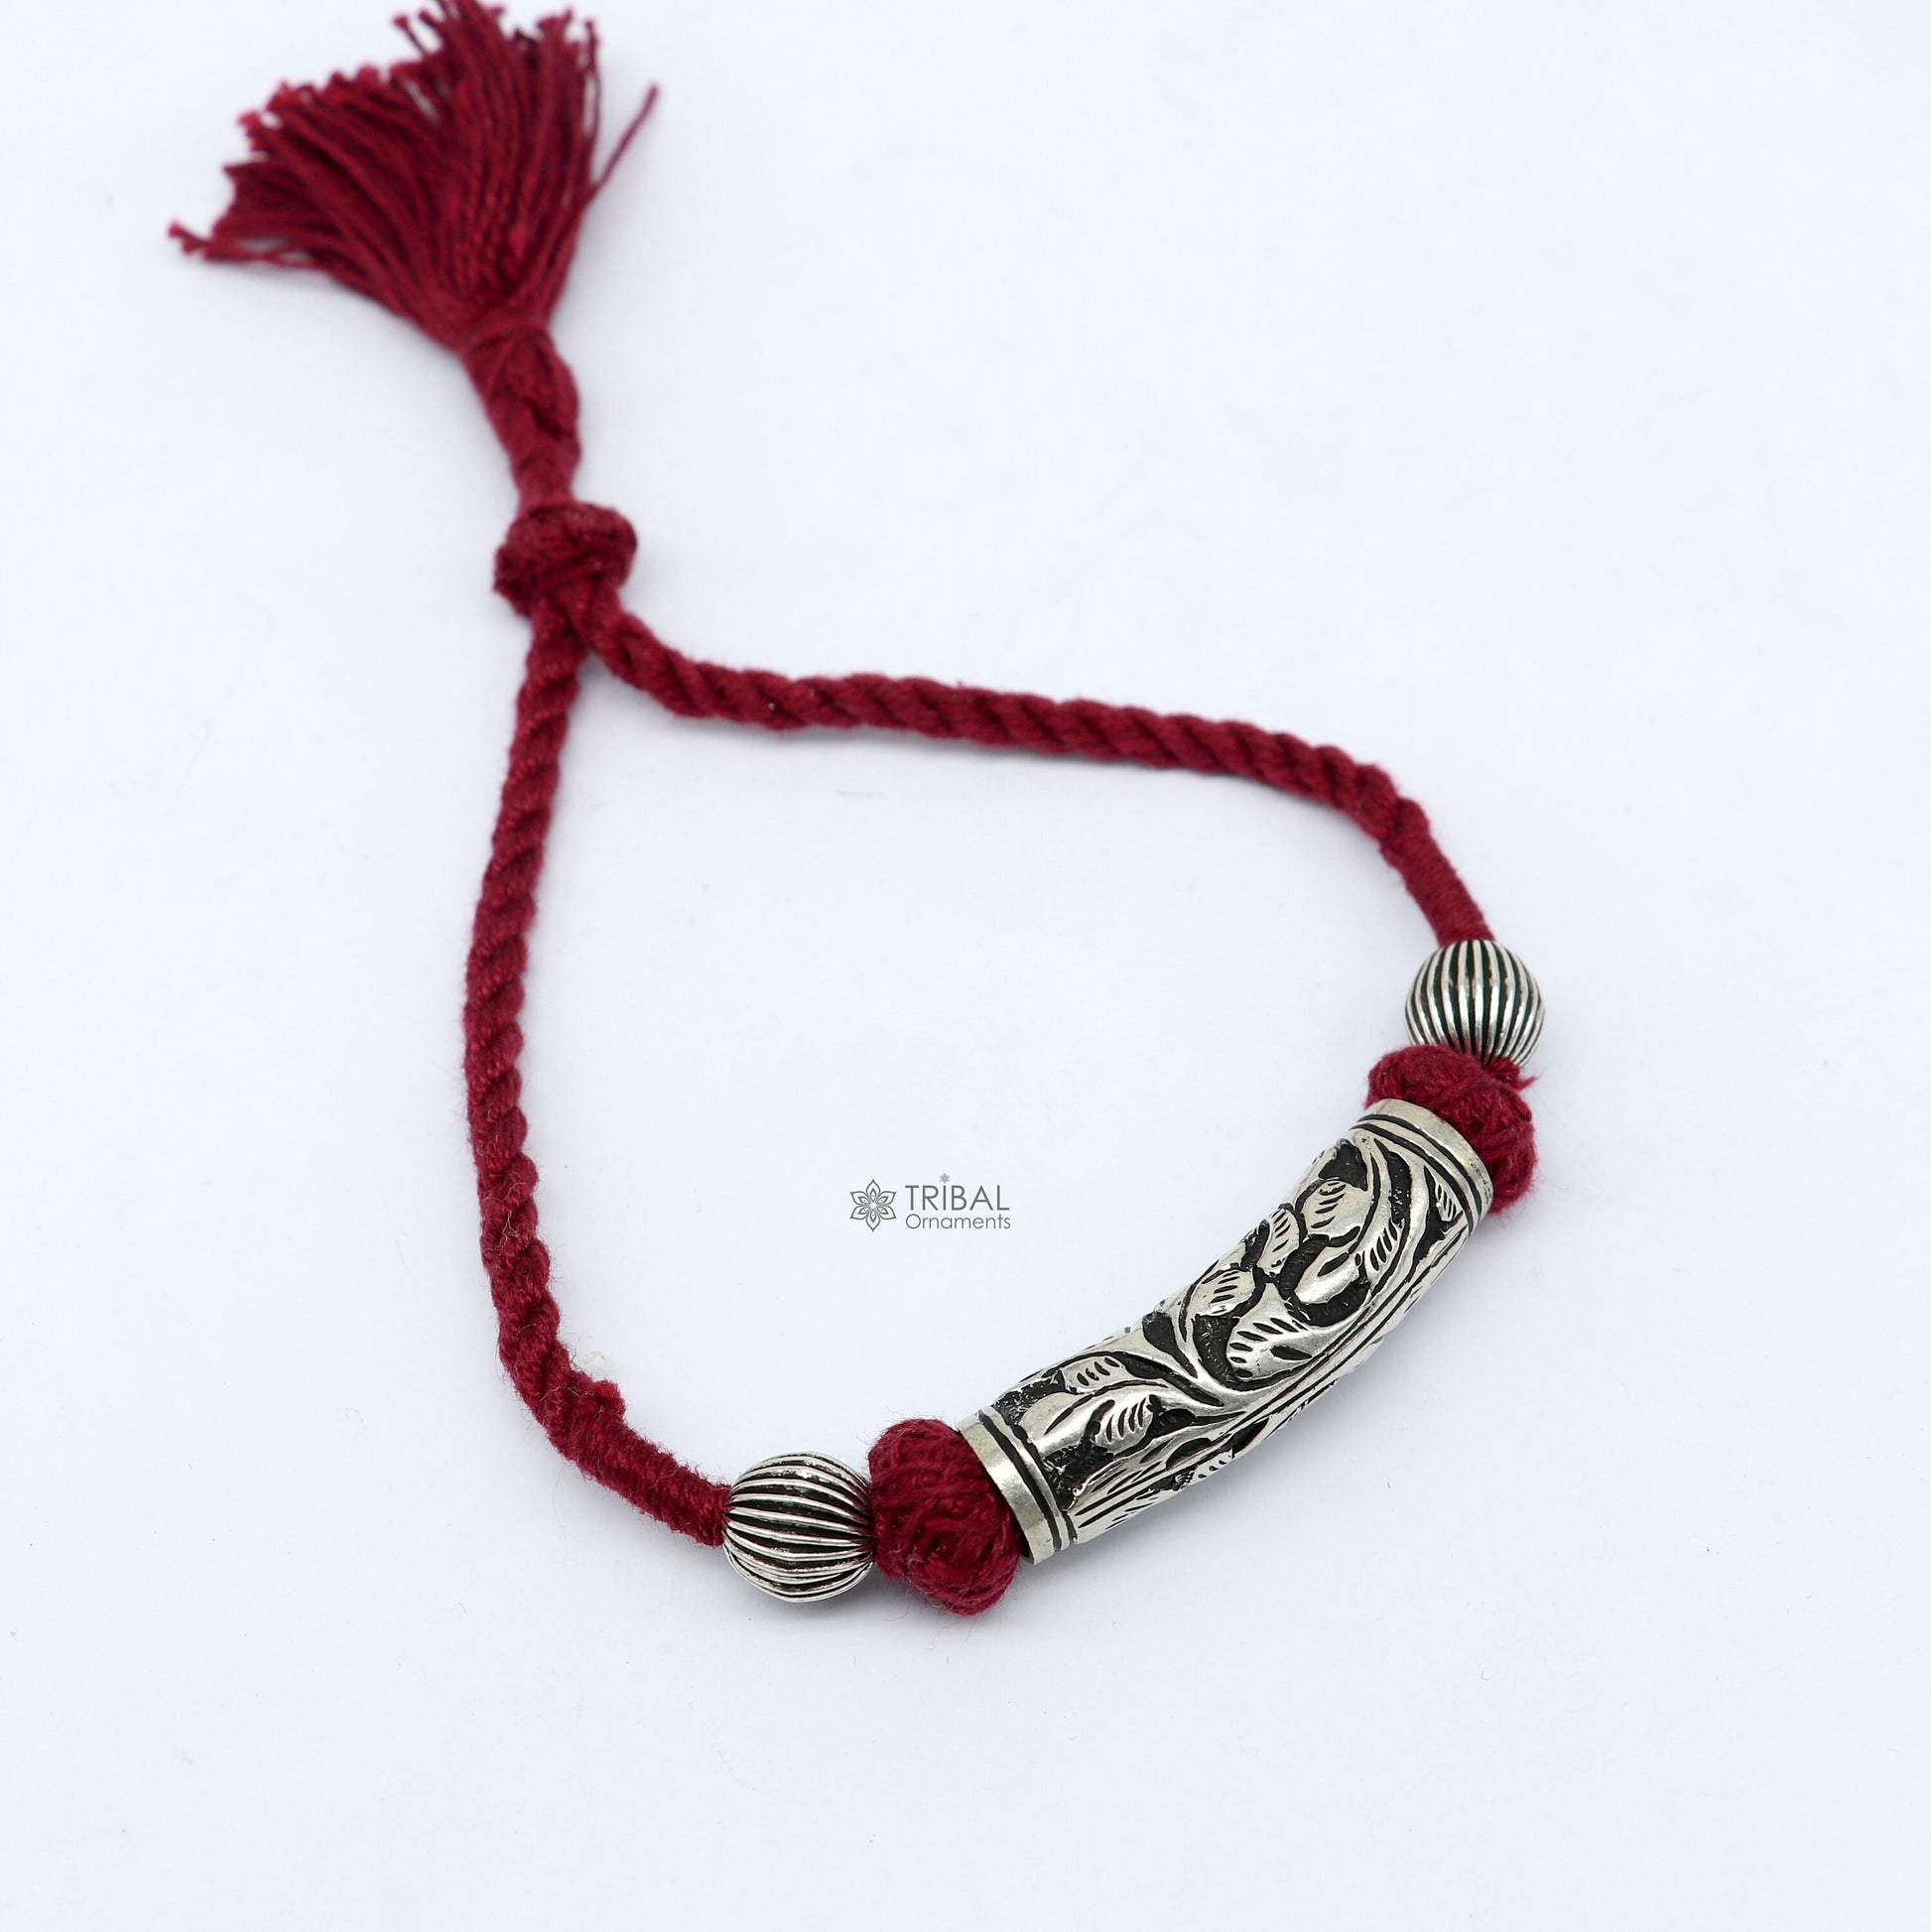 925 sterling silver modern Fancy stylish charm bracelet, adjustable brides gifting fashion wedding ethnic bracelet tribal jewelry sbr681 - TRIBAL ORNAMENTS